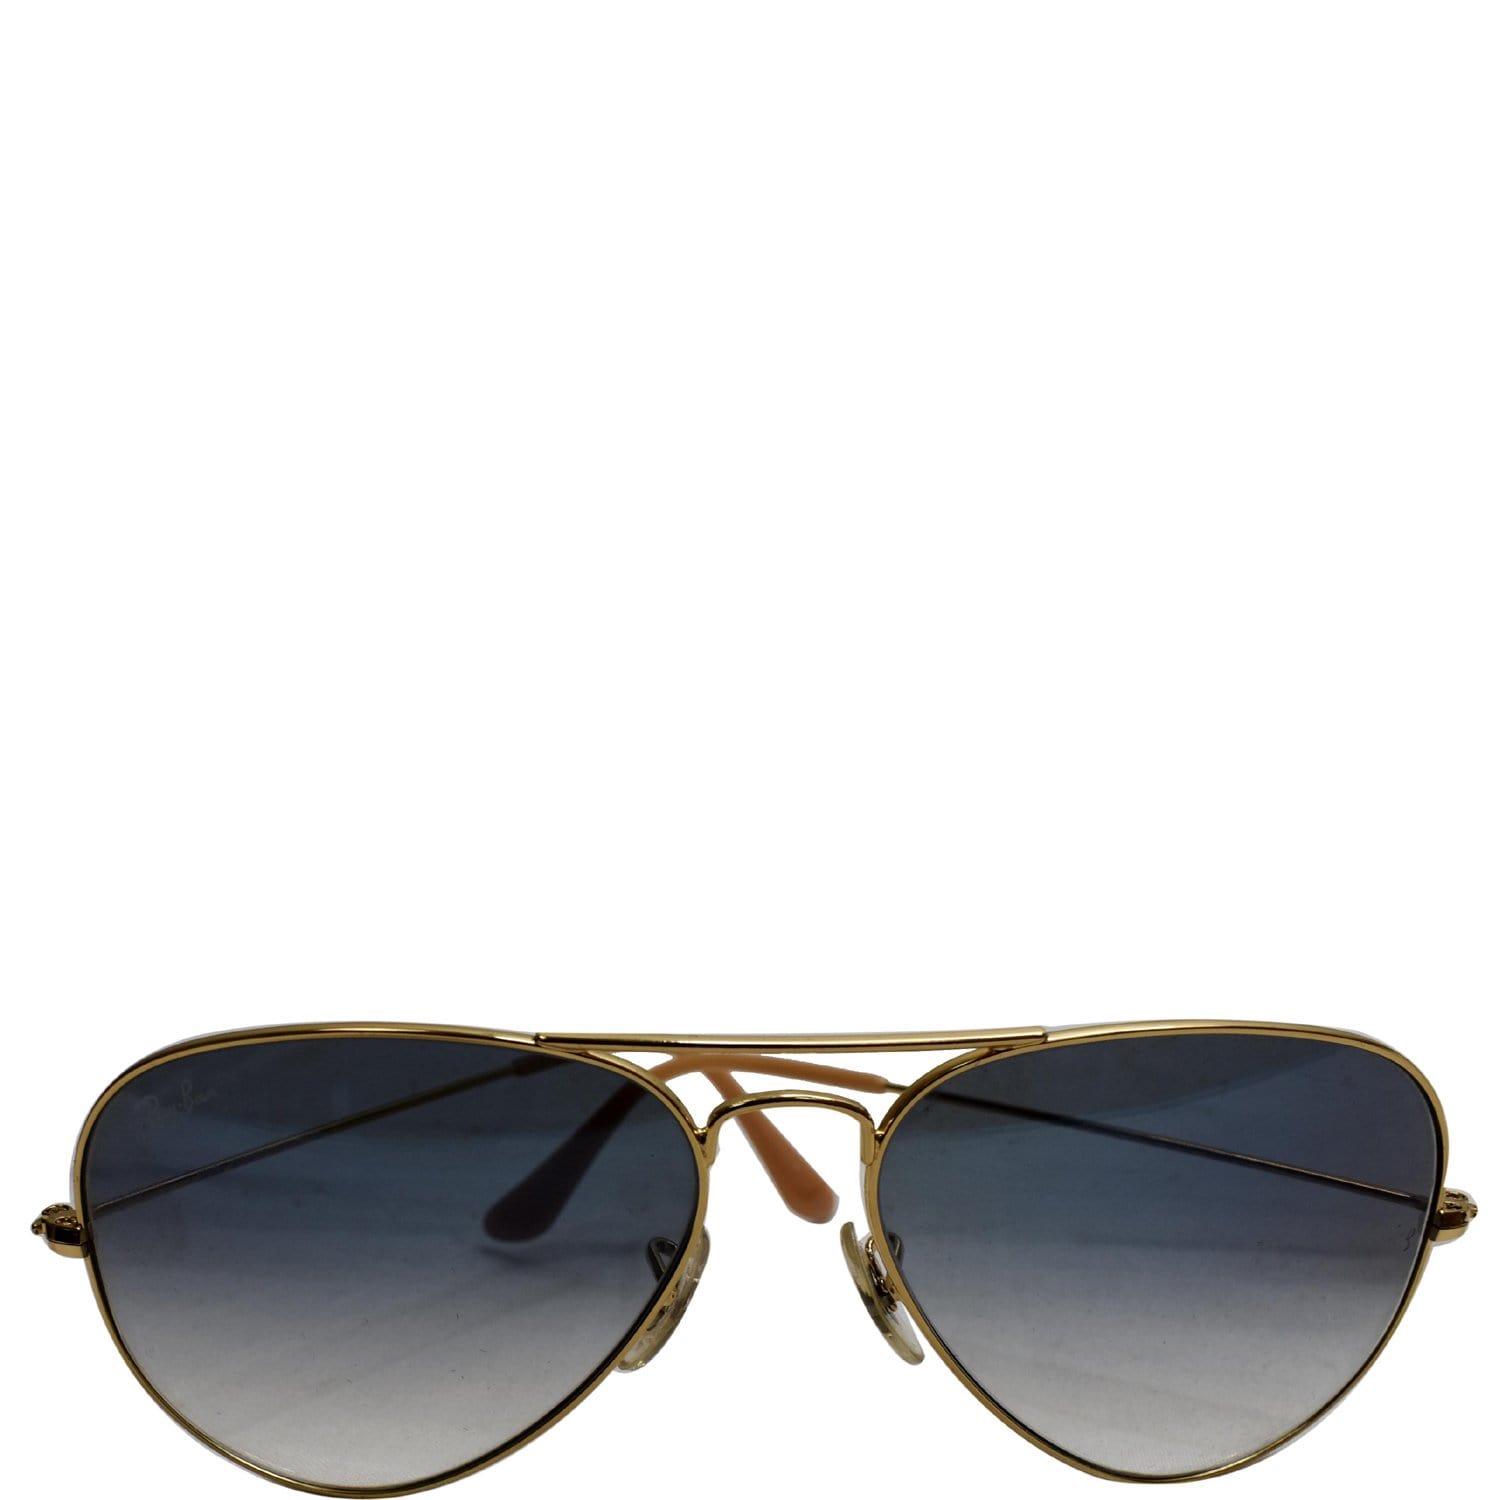 Discover more than 256 light blue gradient sunglasses best